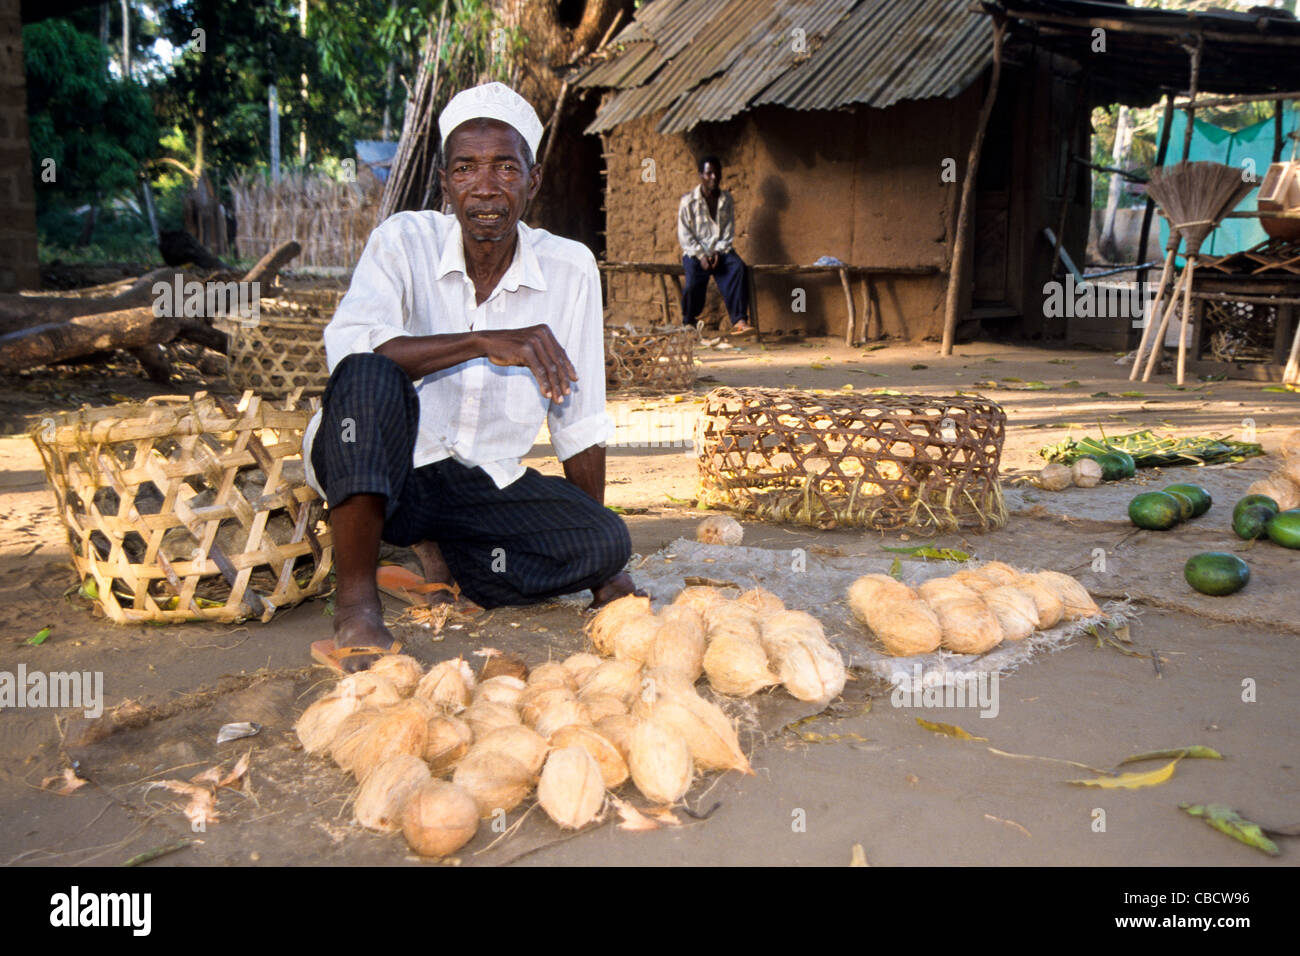 Vende noci di cocco lungo una strada a Dar es Salaam in Tanzania Foto Stock